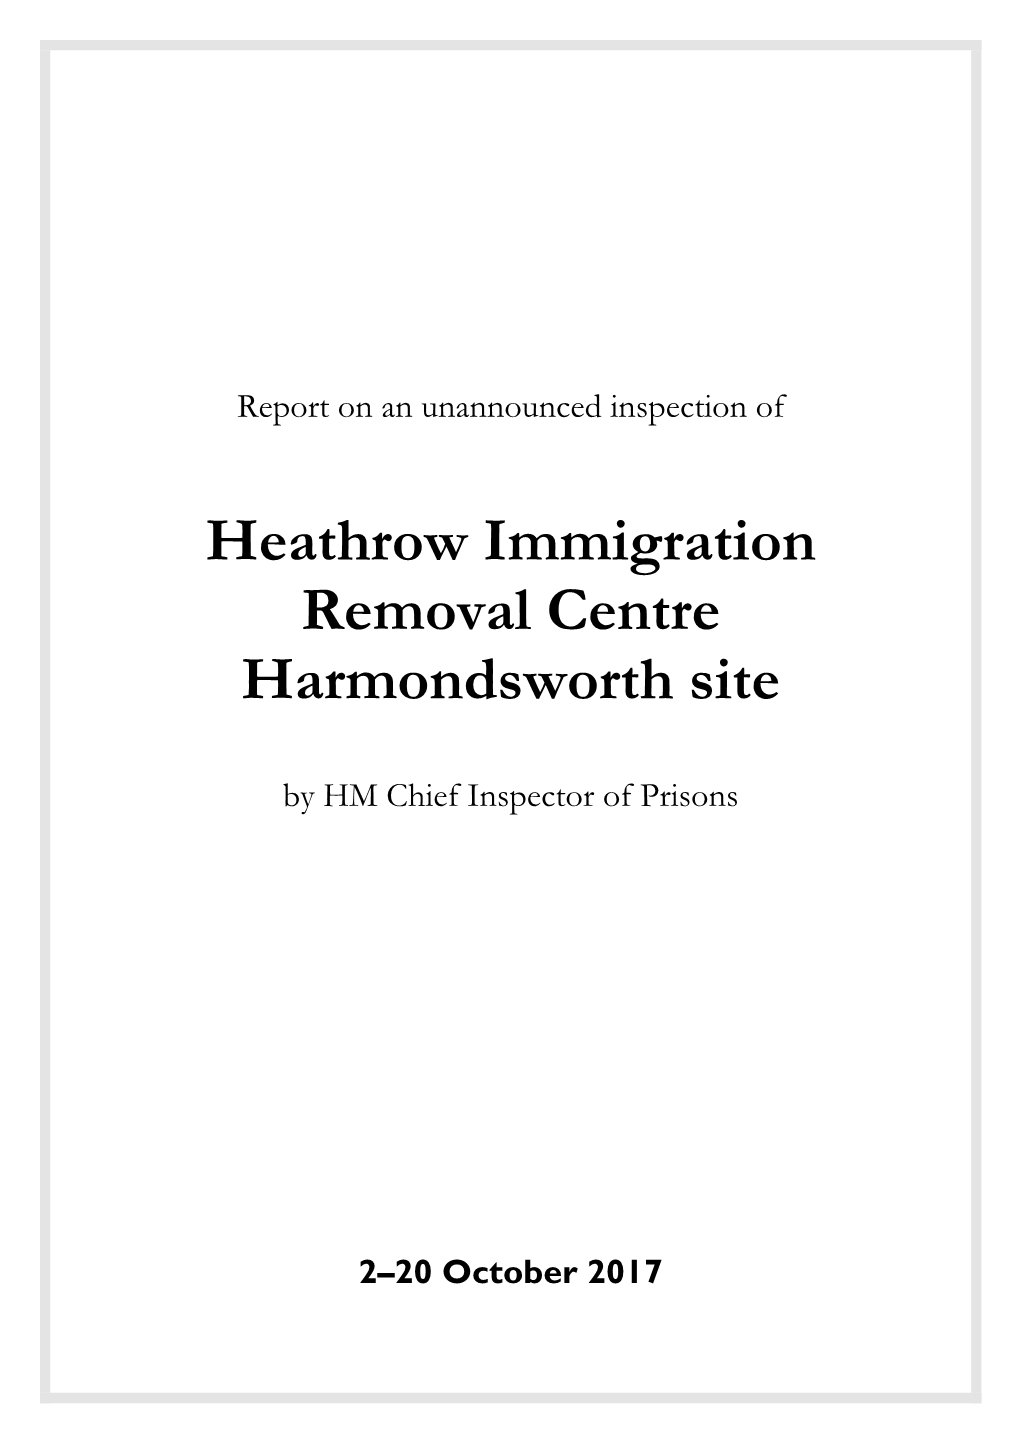 Heathrow Immigration Removal Centre Harmondsworth Site